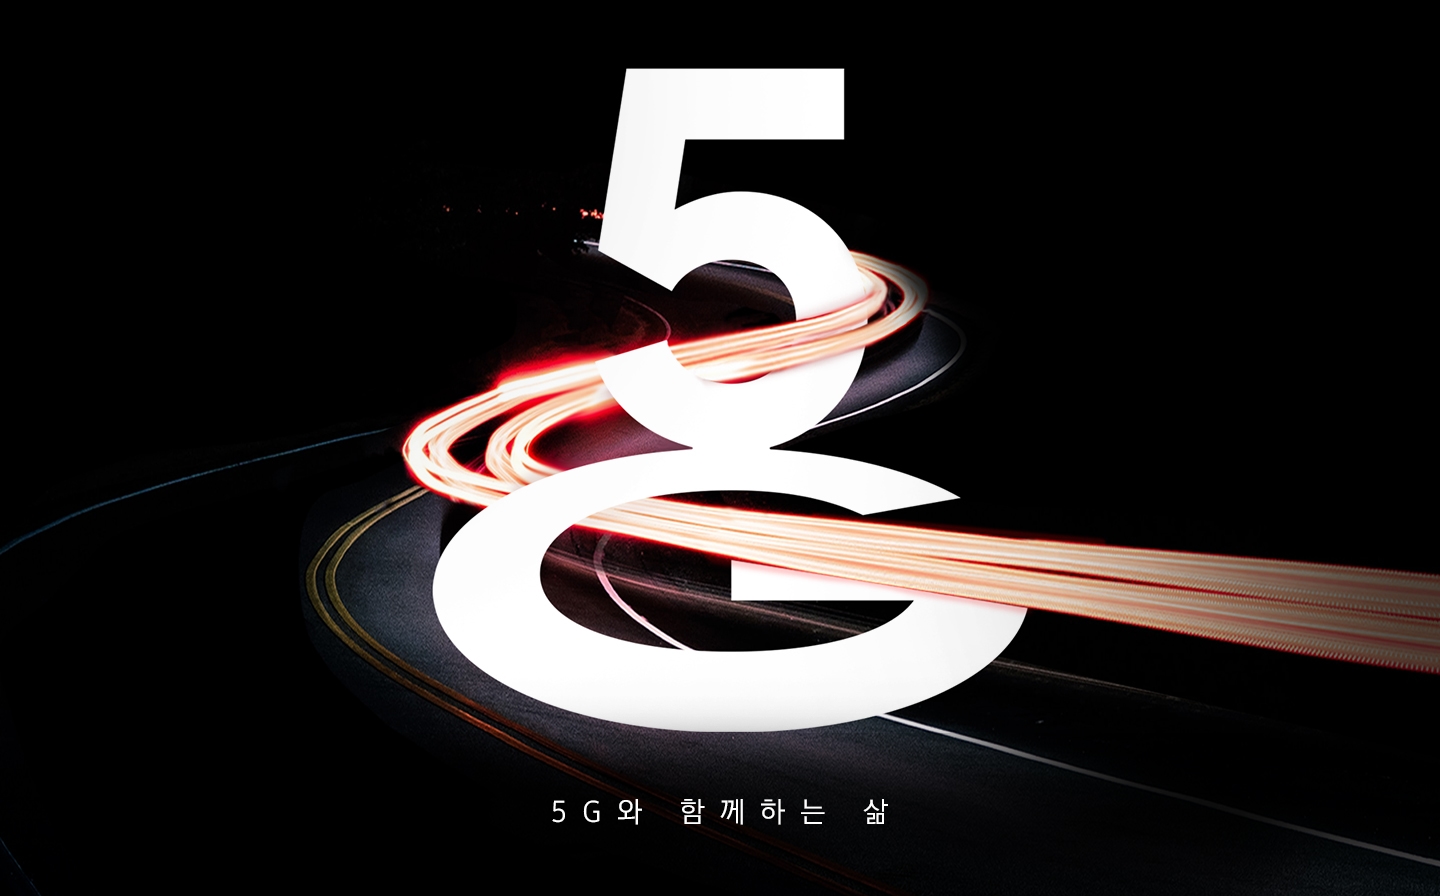 5G 텍스트와 빠른 속도를 표현하는 자동차 불빛 자국이 있습니다. 그 아래에는 '5G와 함께하는 삶'이라는 텍스트가 적혀 있습니다.